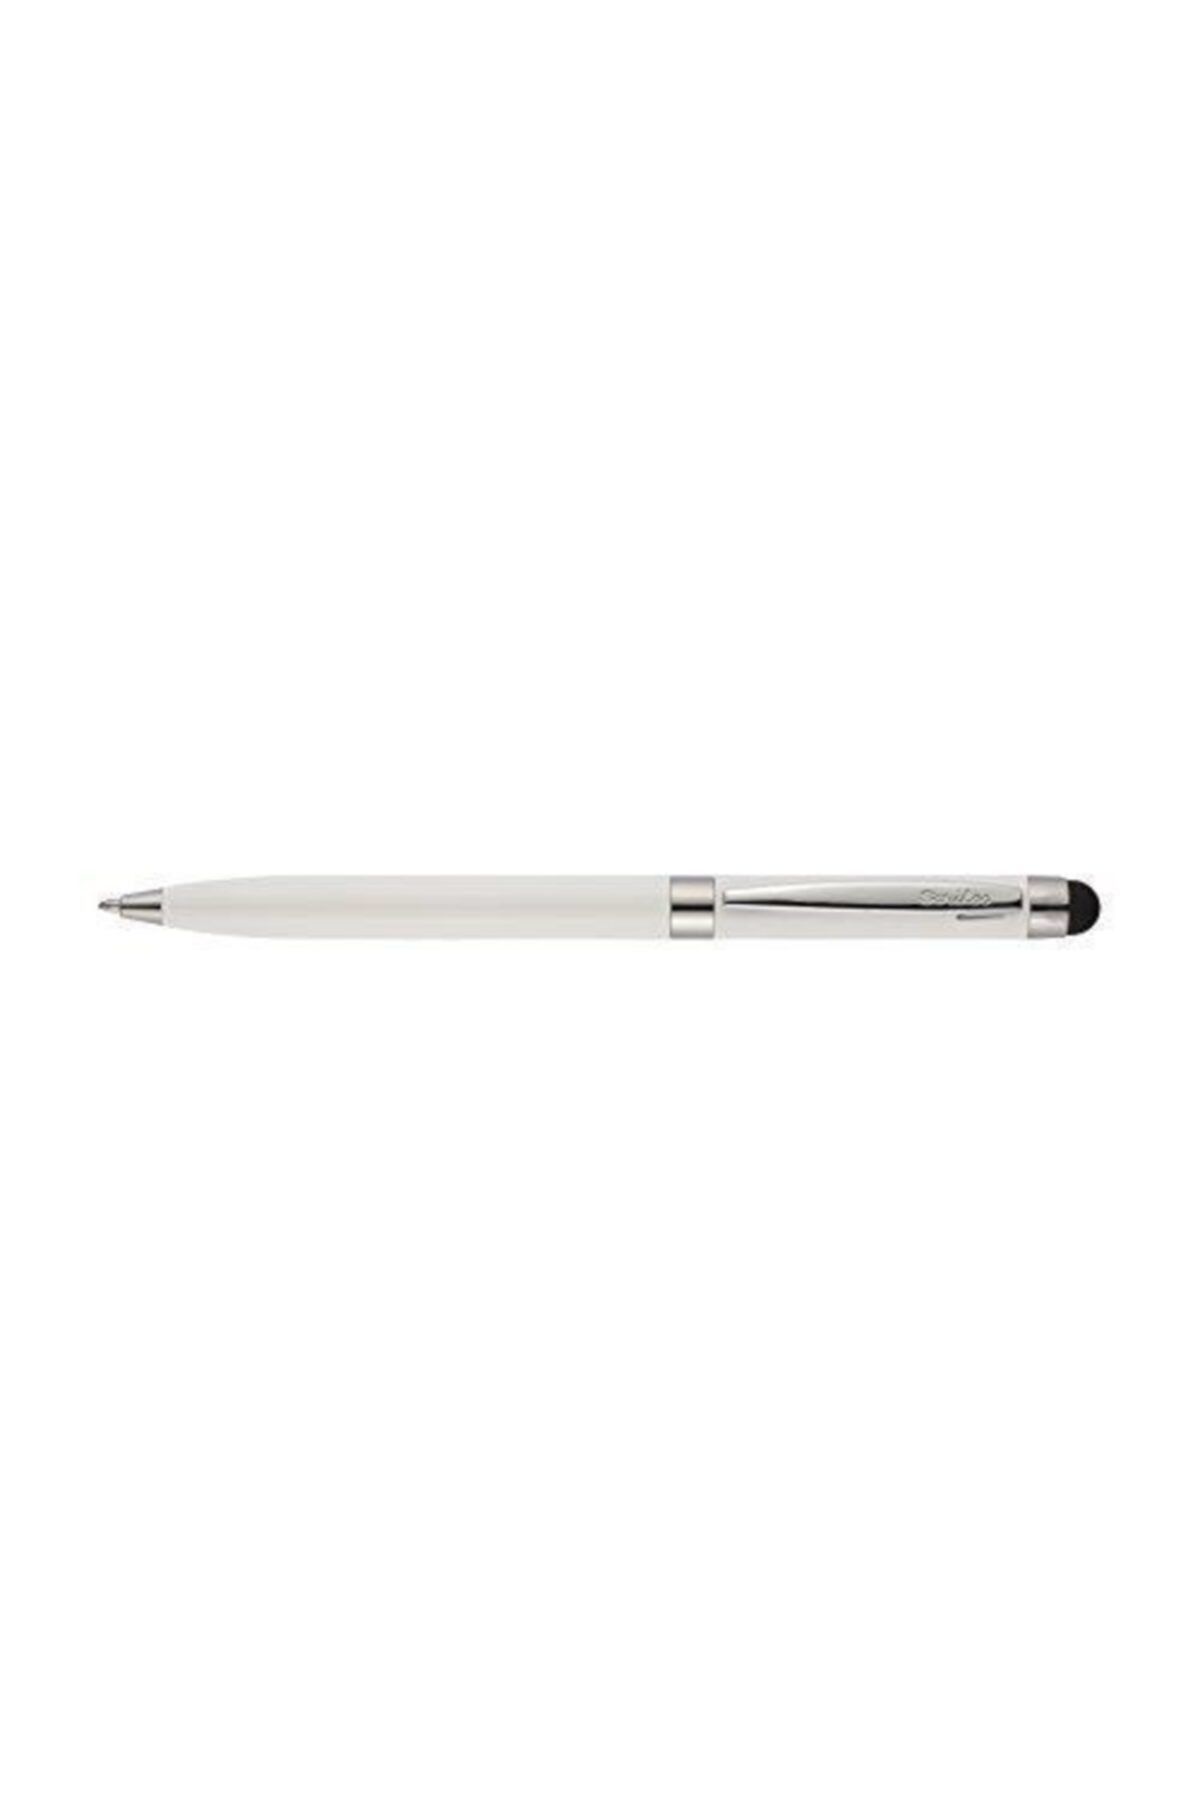 Scrikss Marka: Touch Pen 599 Stylus Tükenmez Kalem Beyaz Kategori: Kalem Uçları